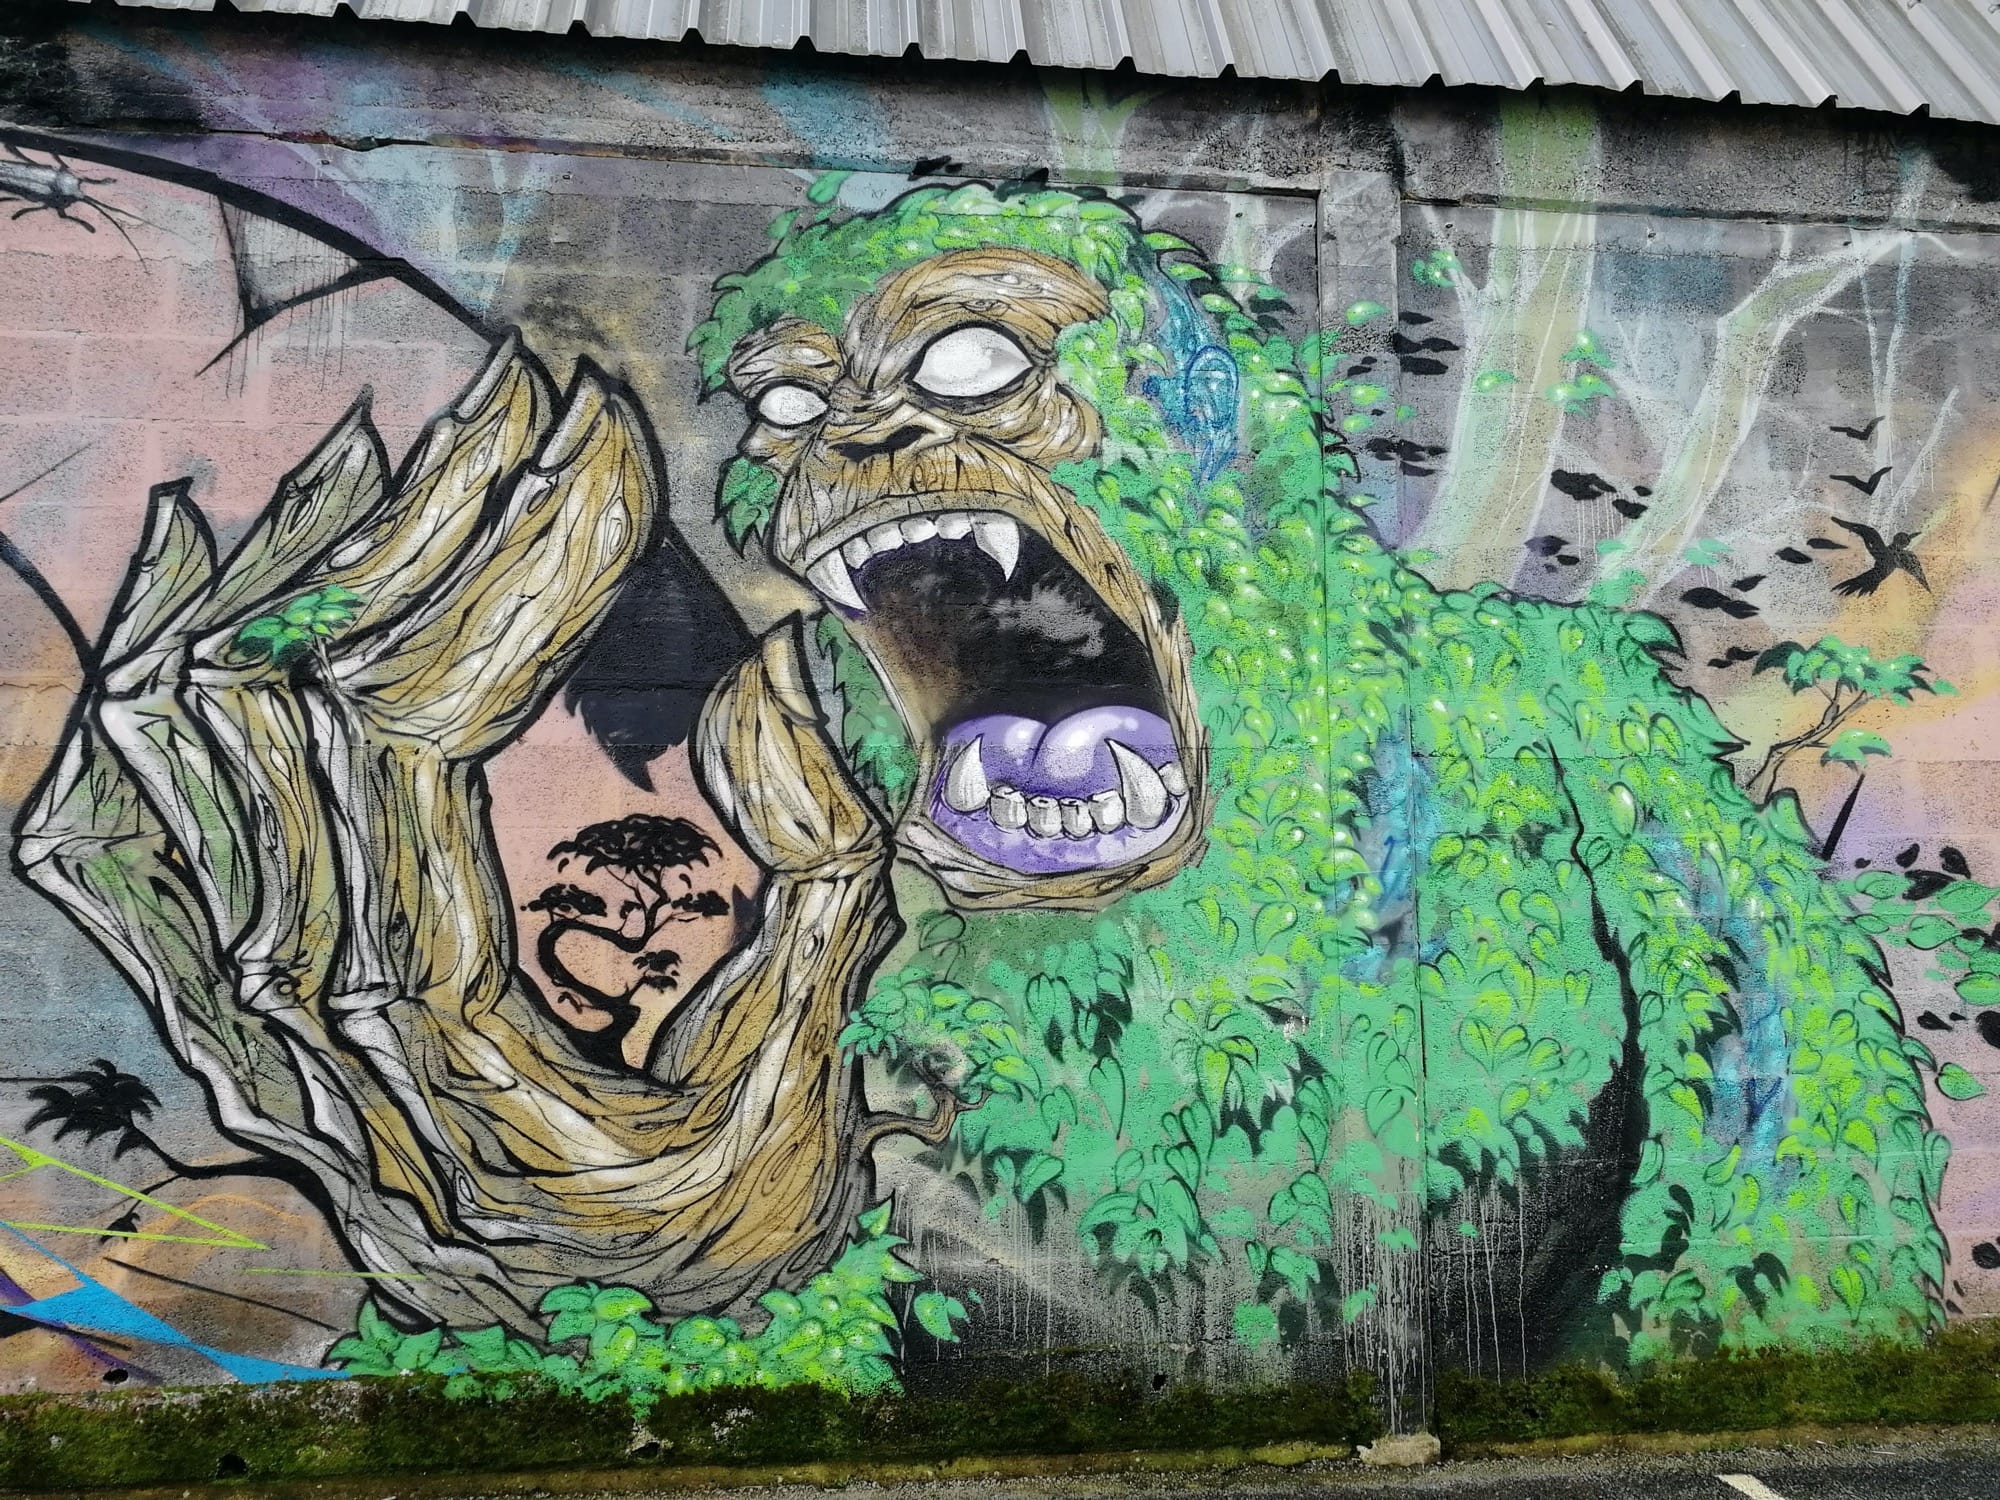 Graffiti 1182 Forest gorilla captured by Rabot in Redon France